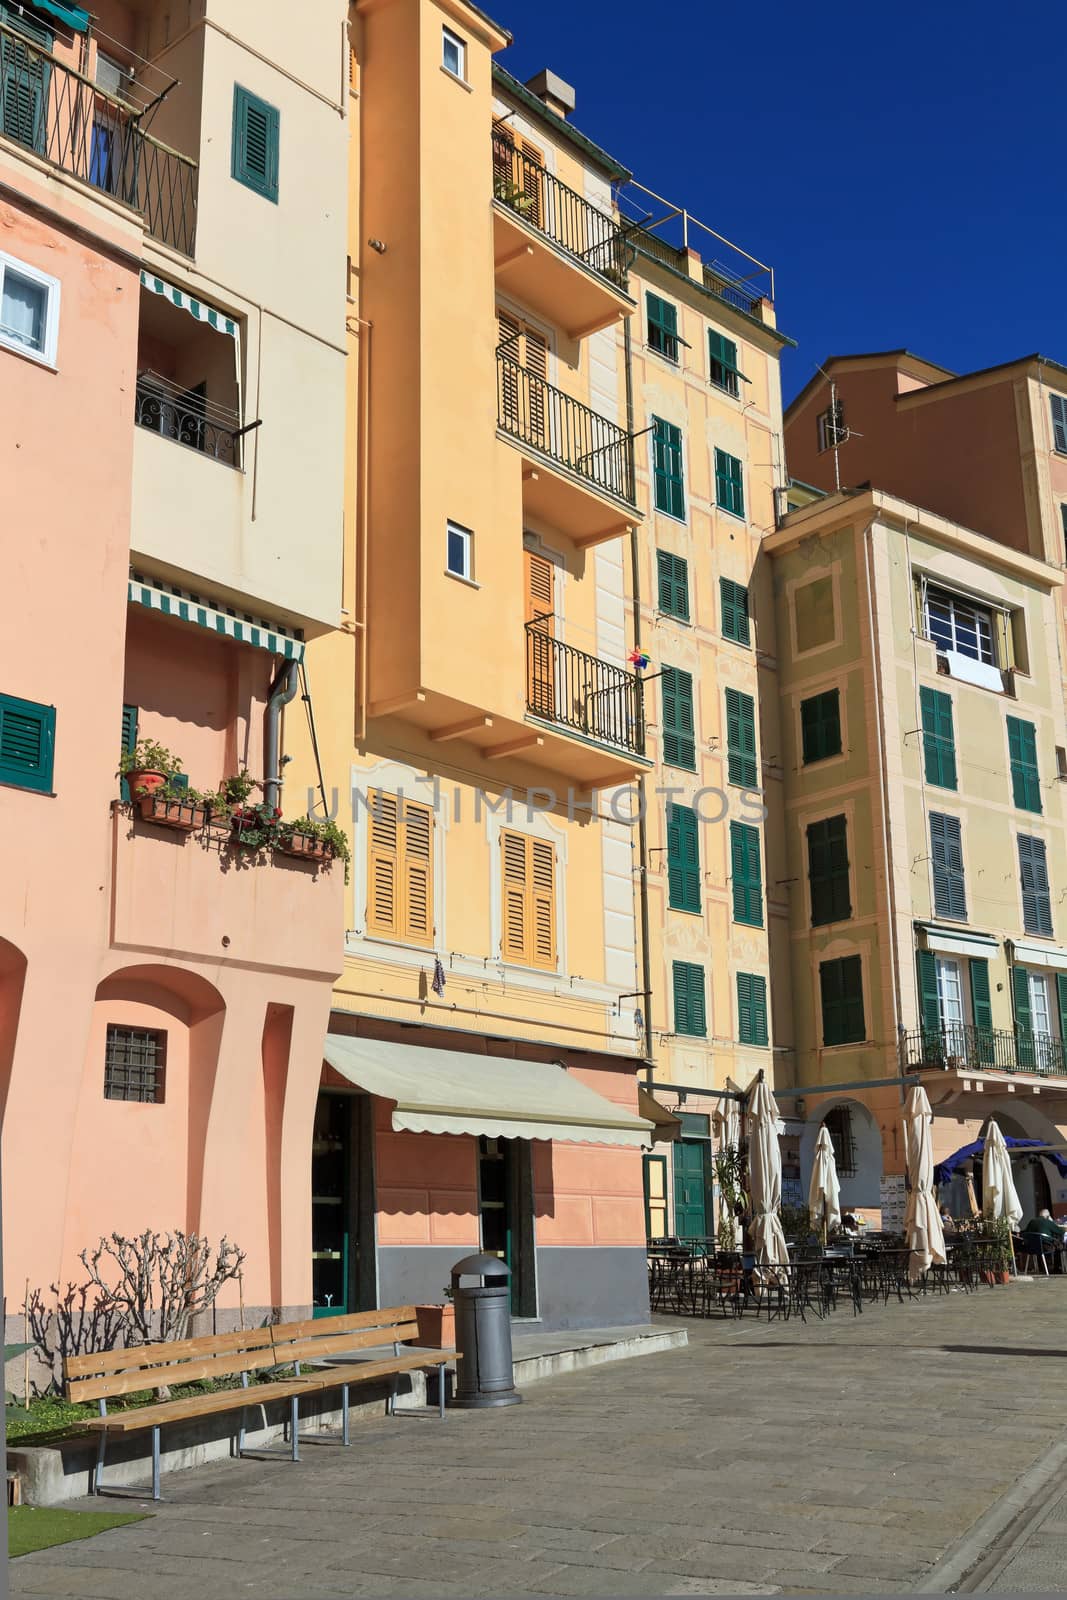 homes and promenade in Camogli, famous small town in Liguria, Italy
